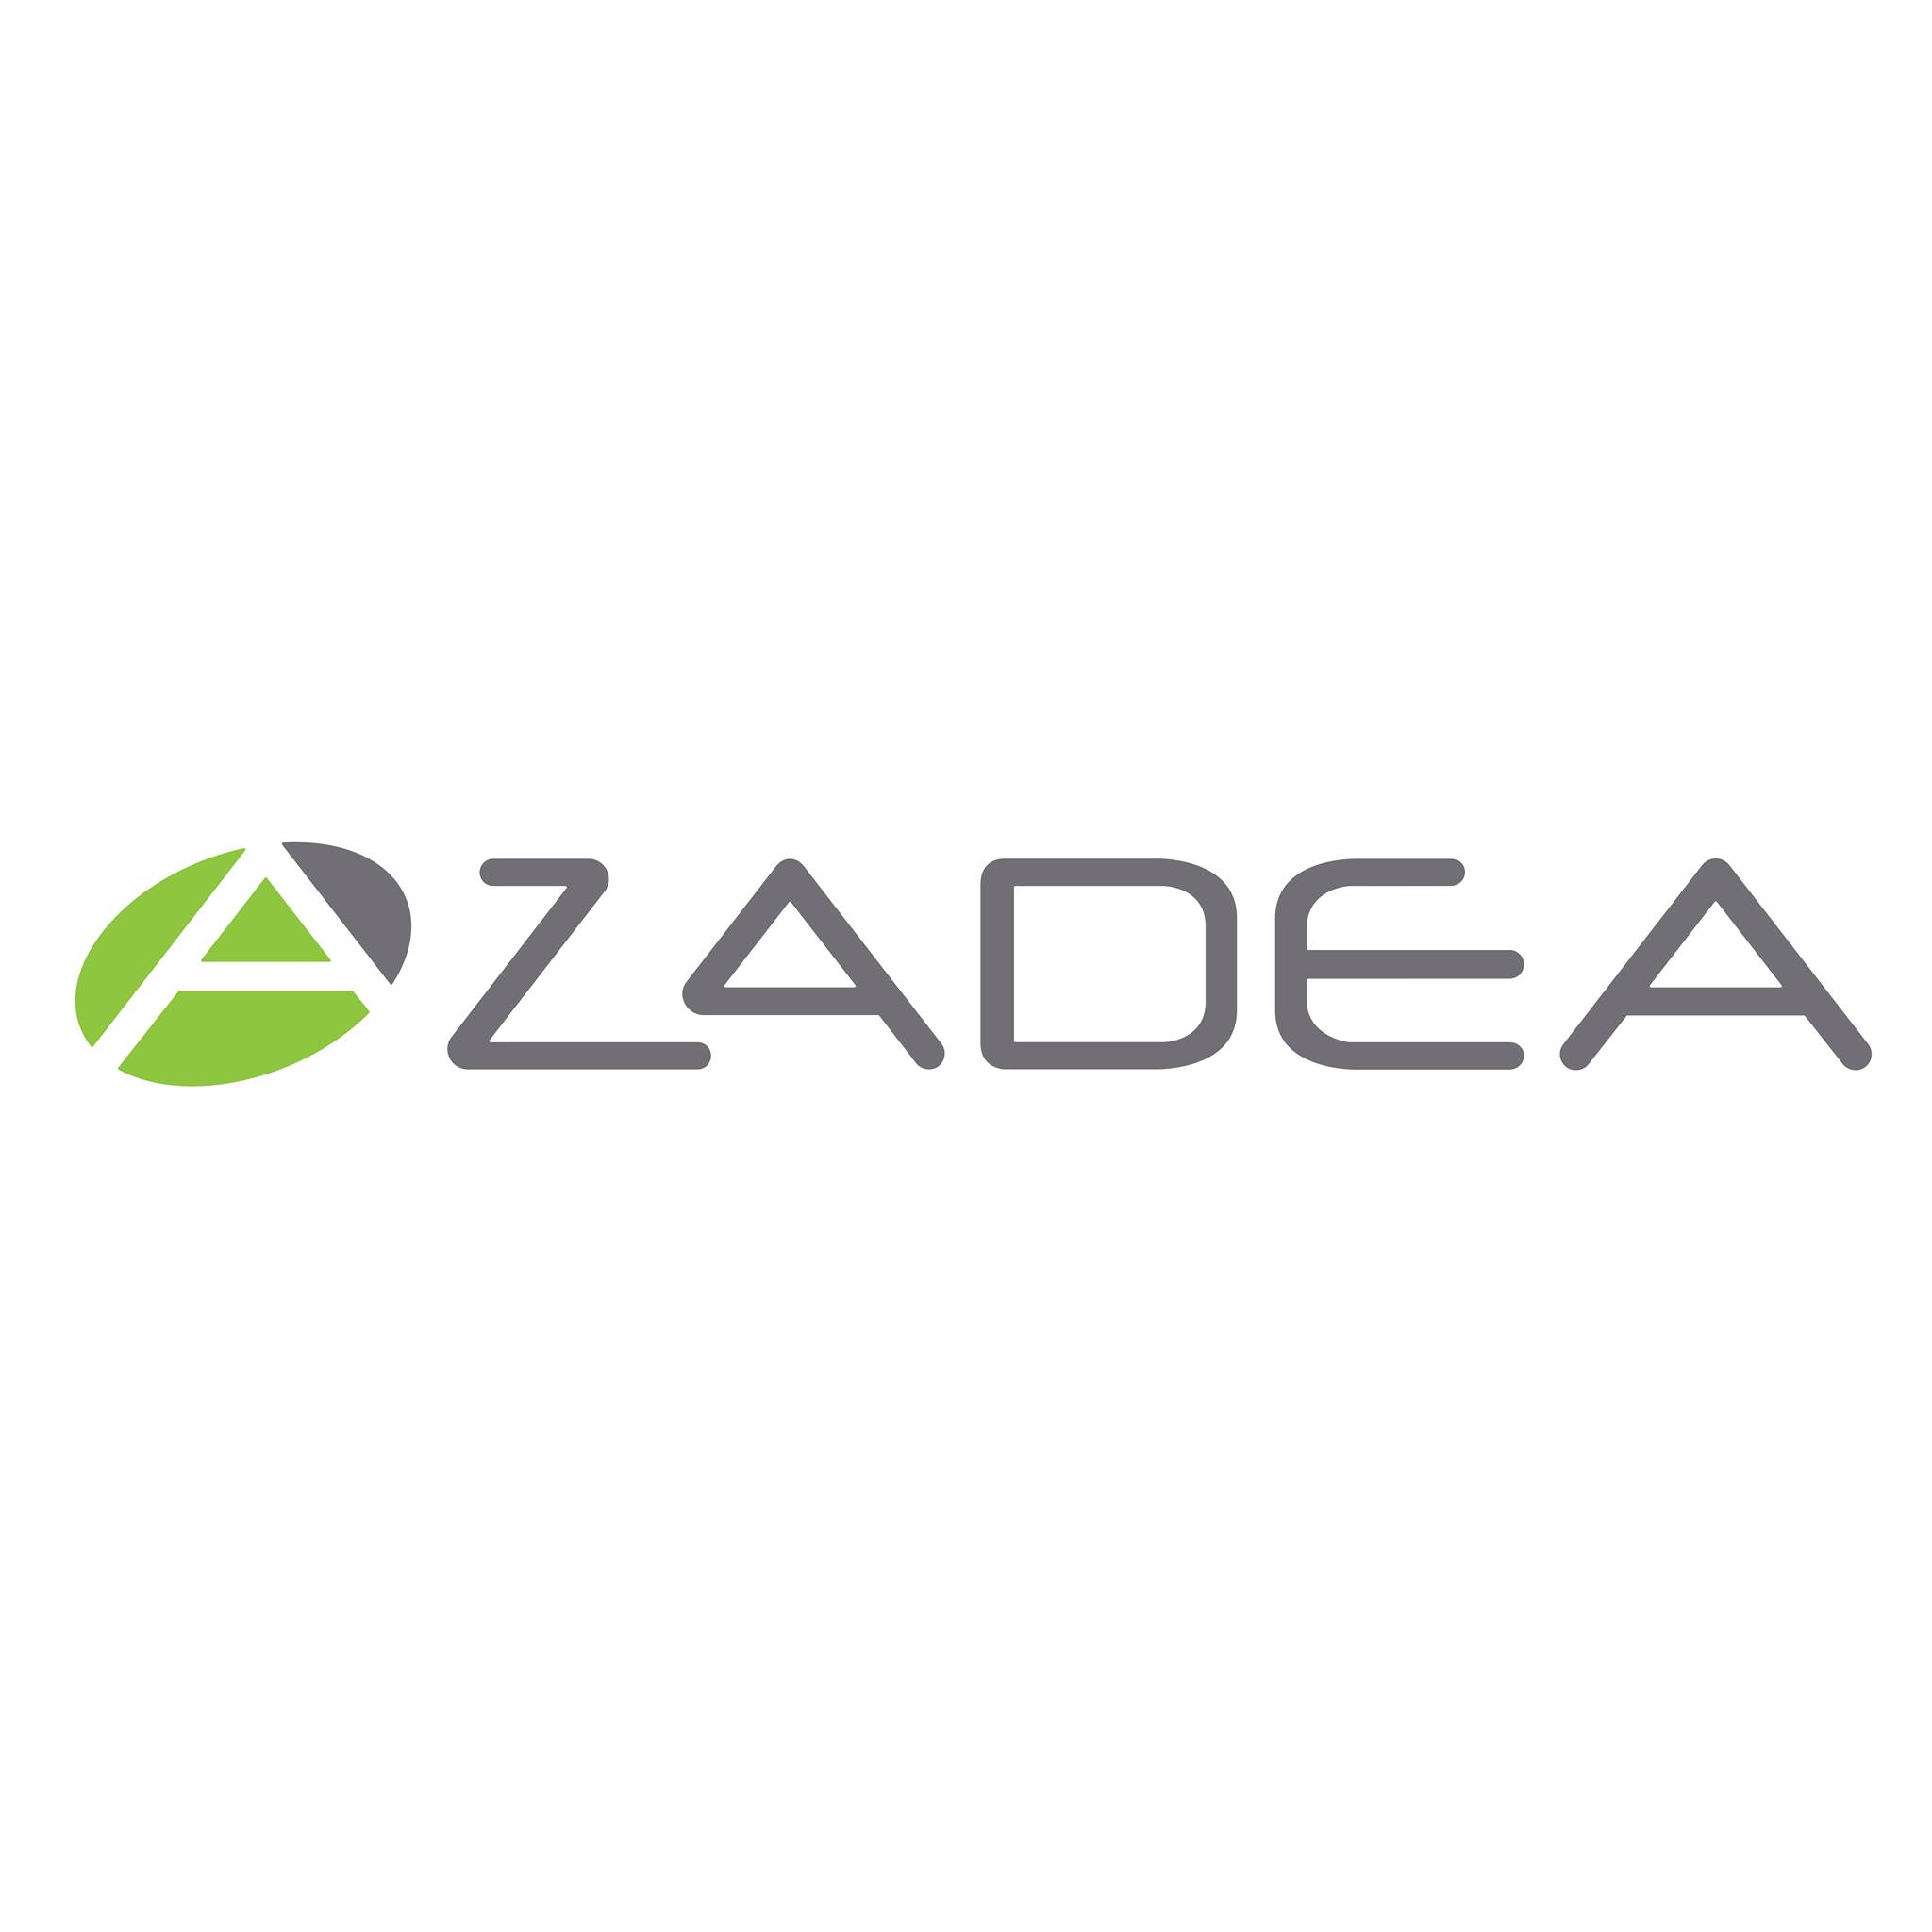 Azadea Group